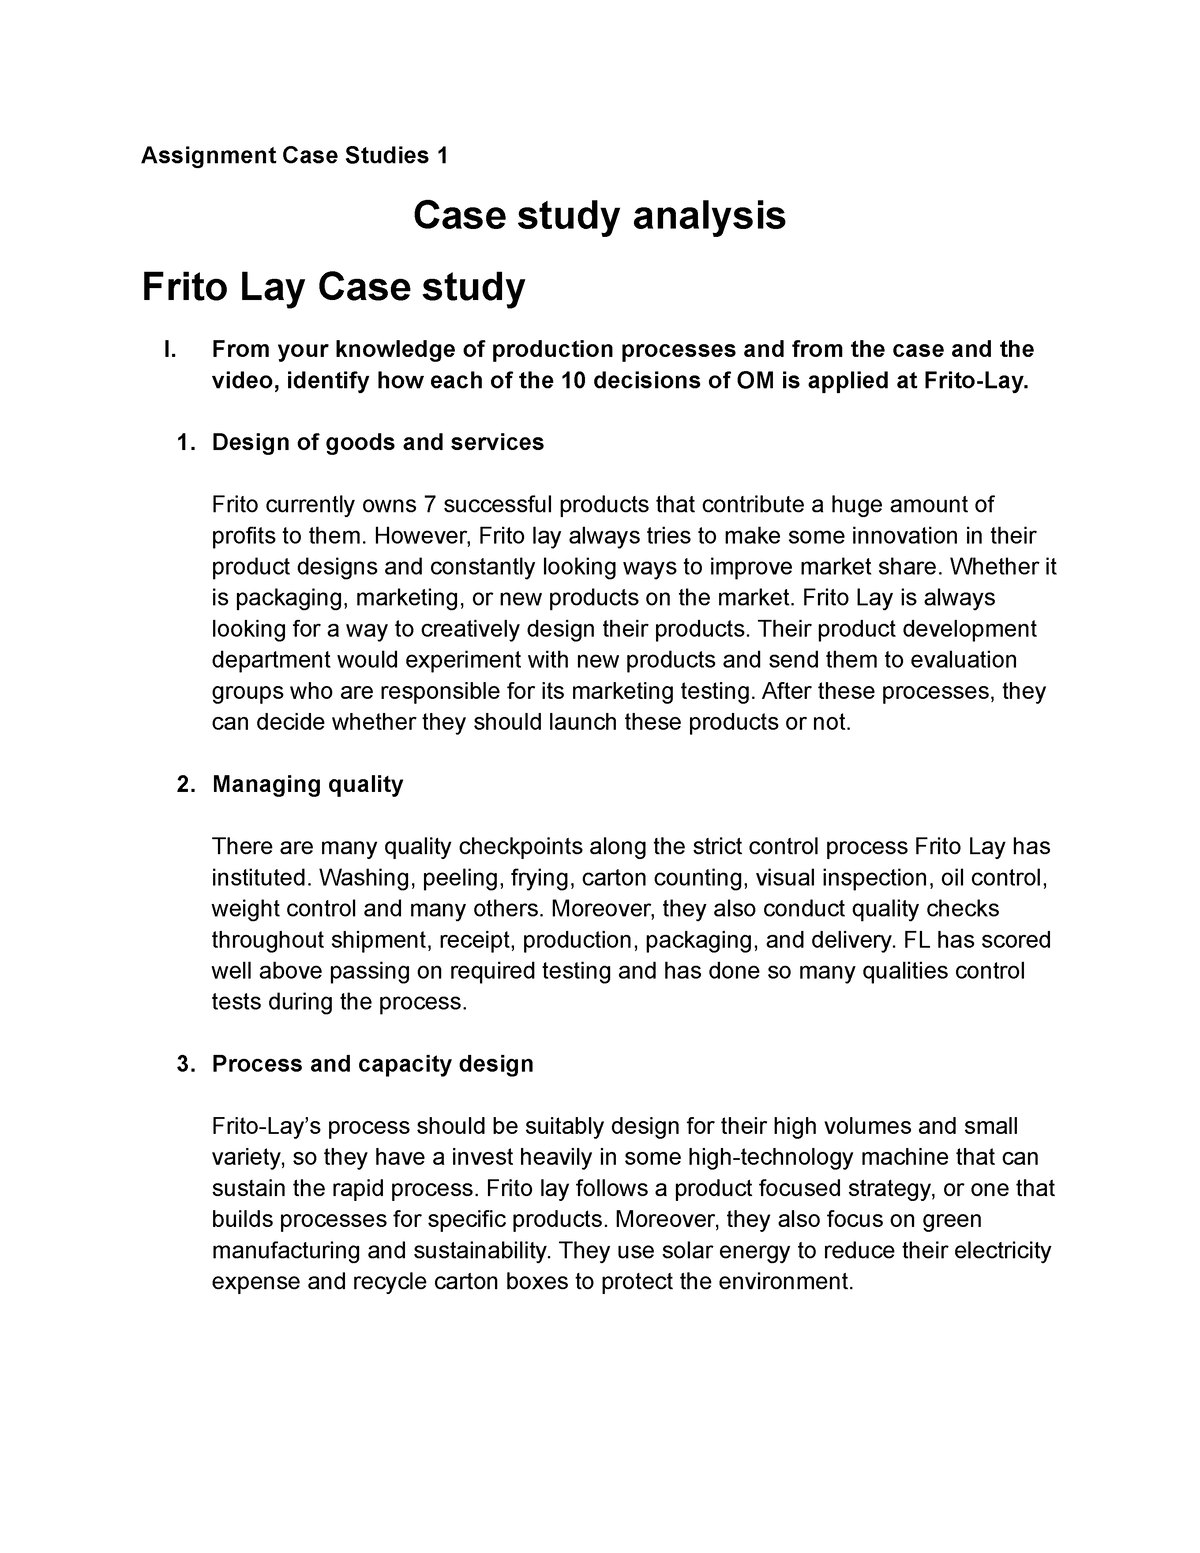 CA- SCOMT CASE Study 1 Frito LAY COMPANY - Assignment Case Studies 1 ...